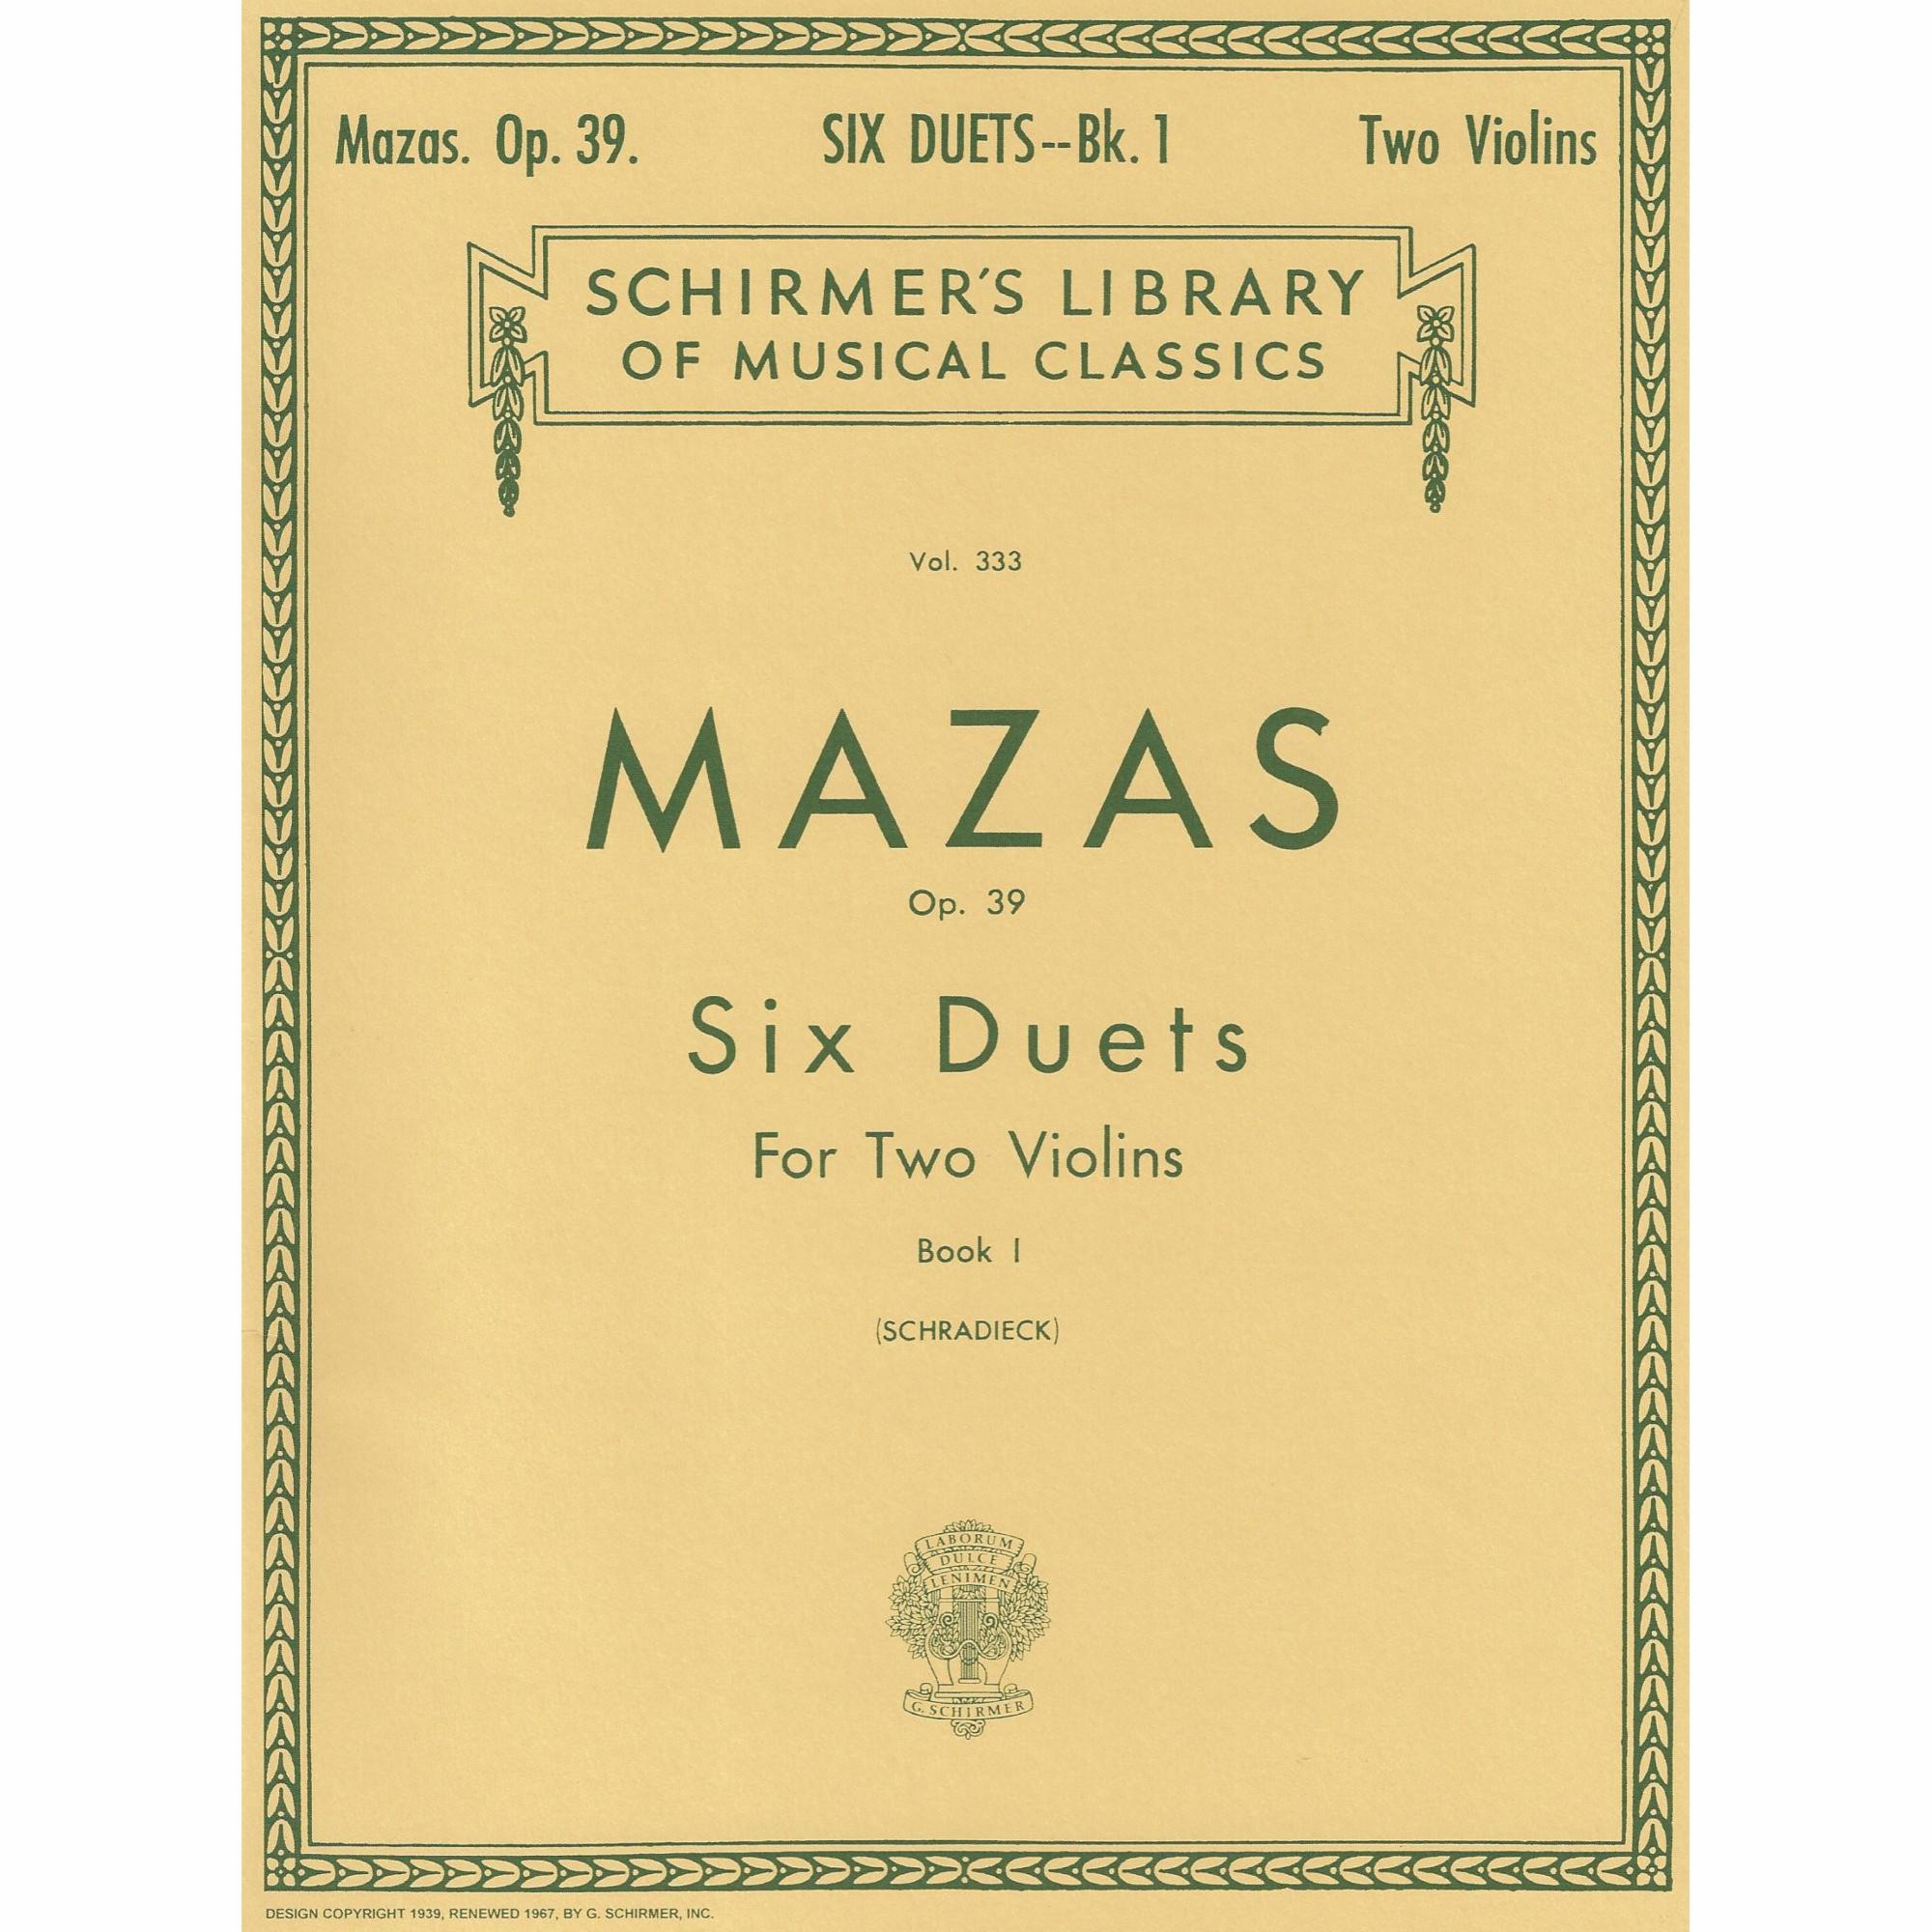 Mazas -- Six Duets, Op. 39, Bk. I for Two Violins